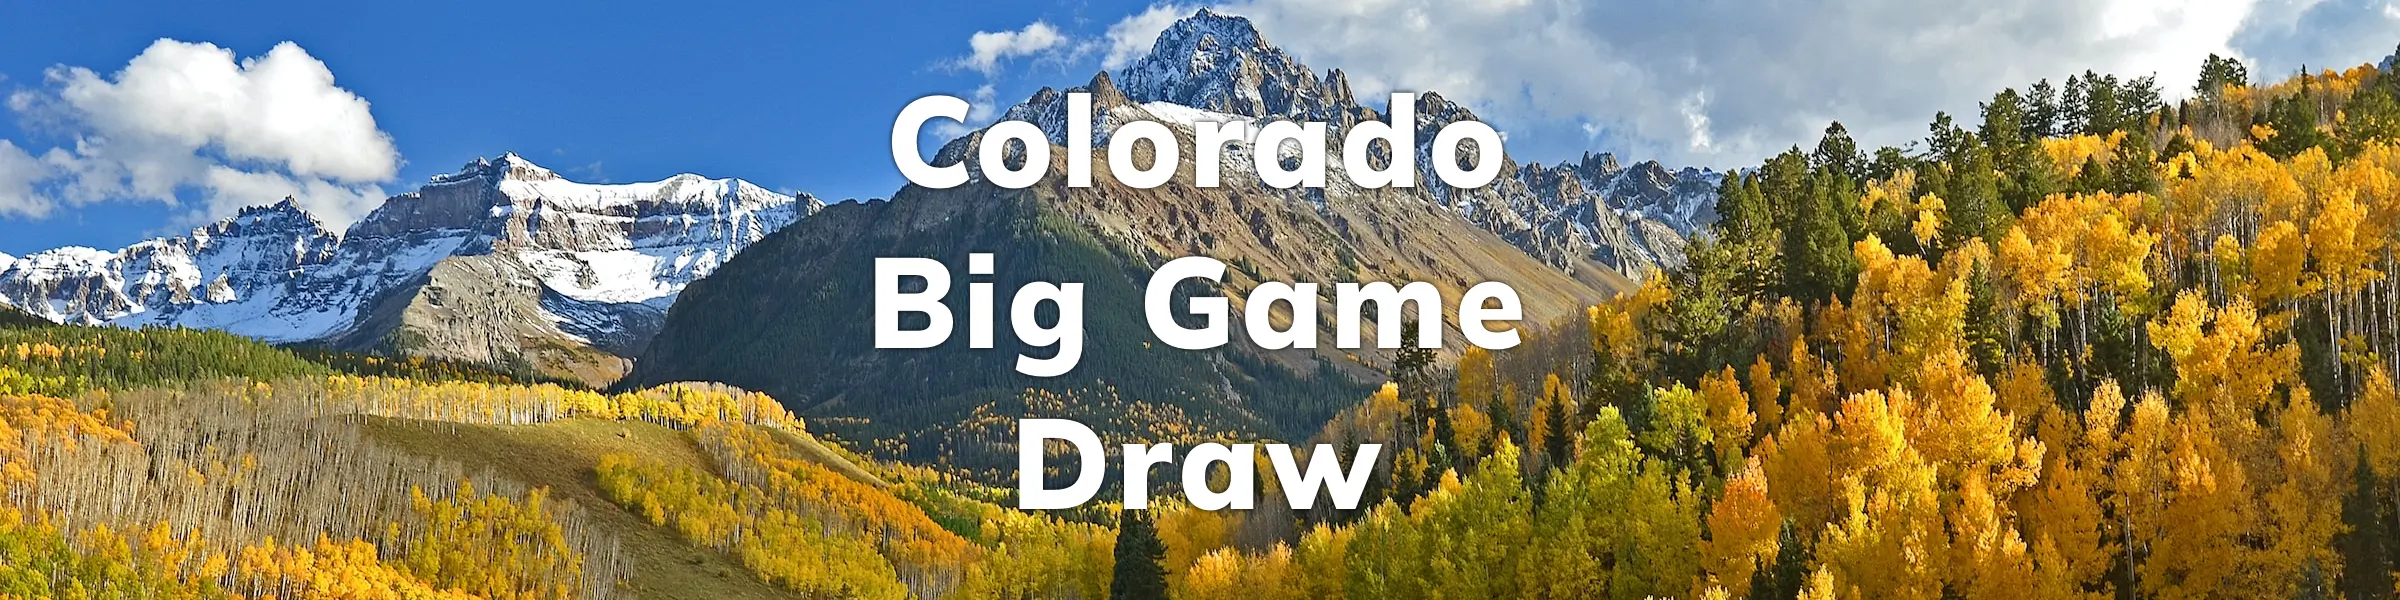 Colorado Big Game Draw